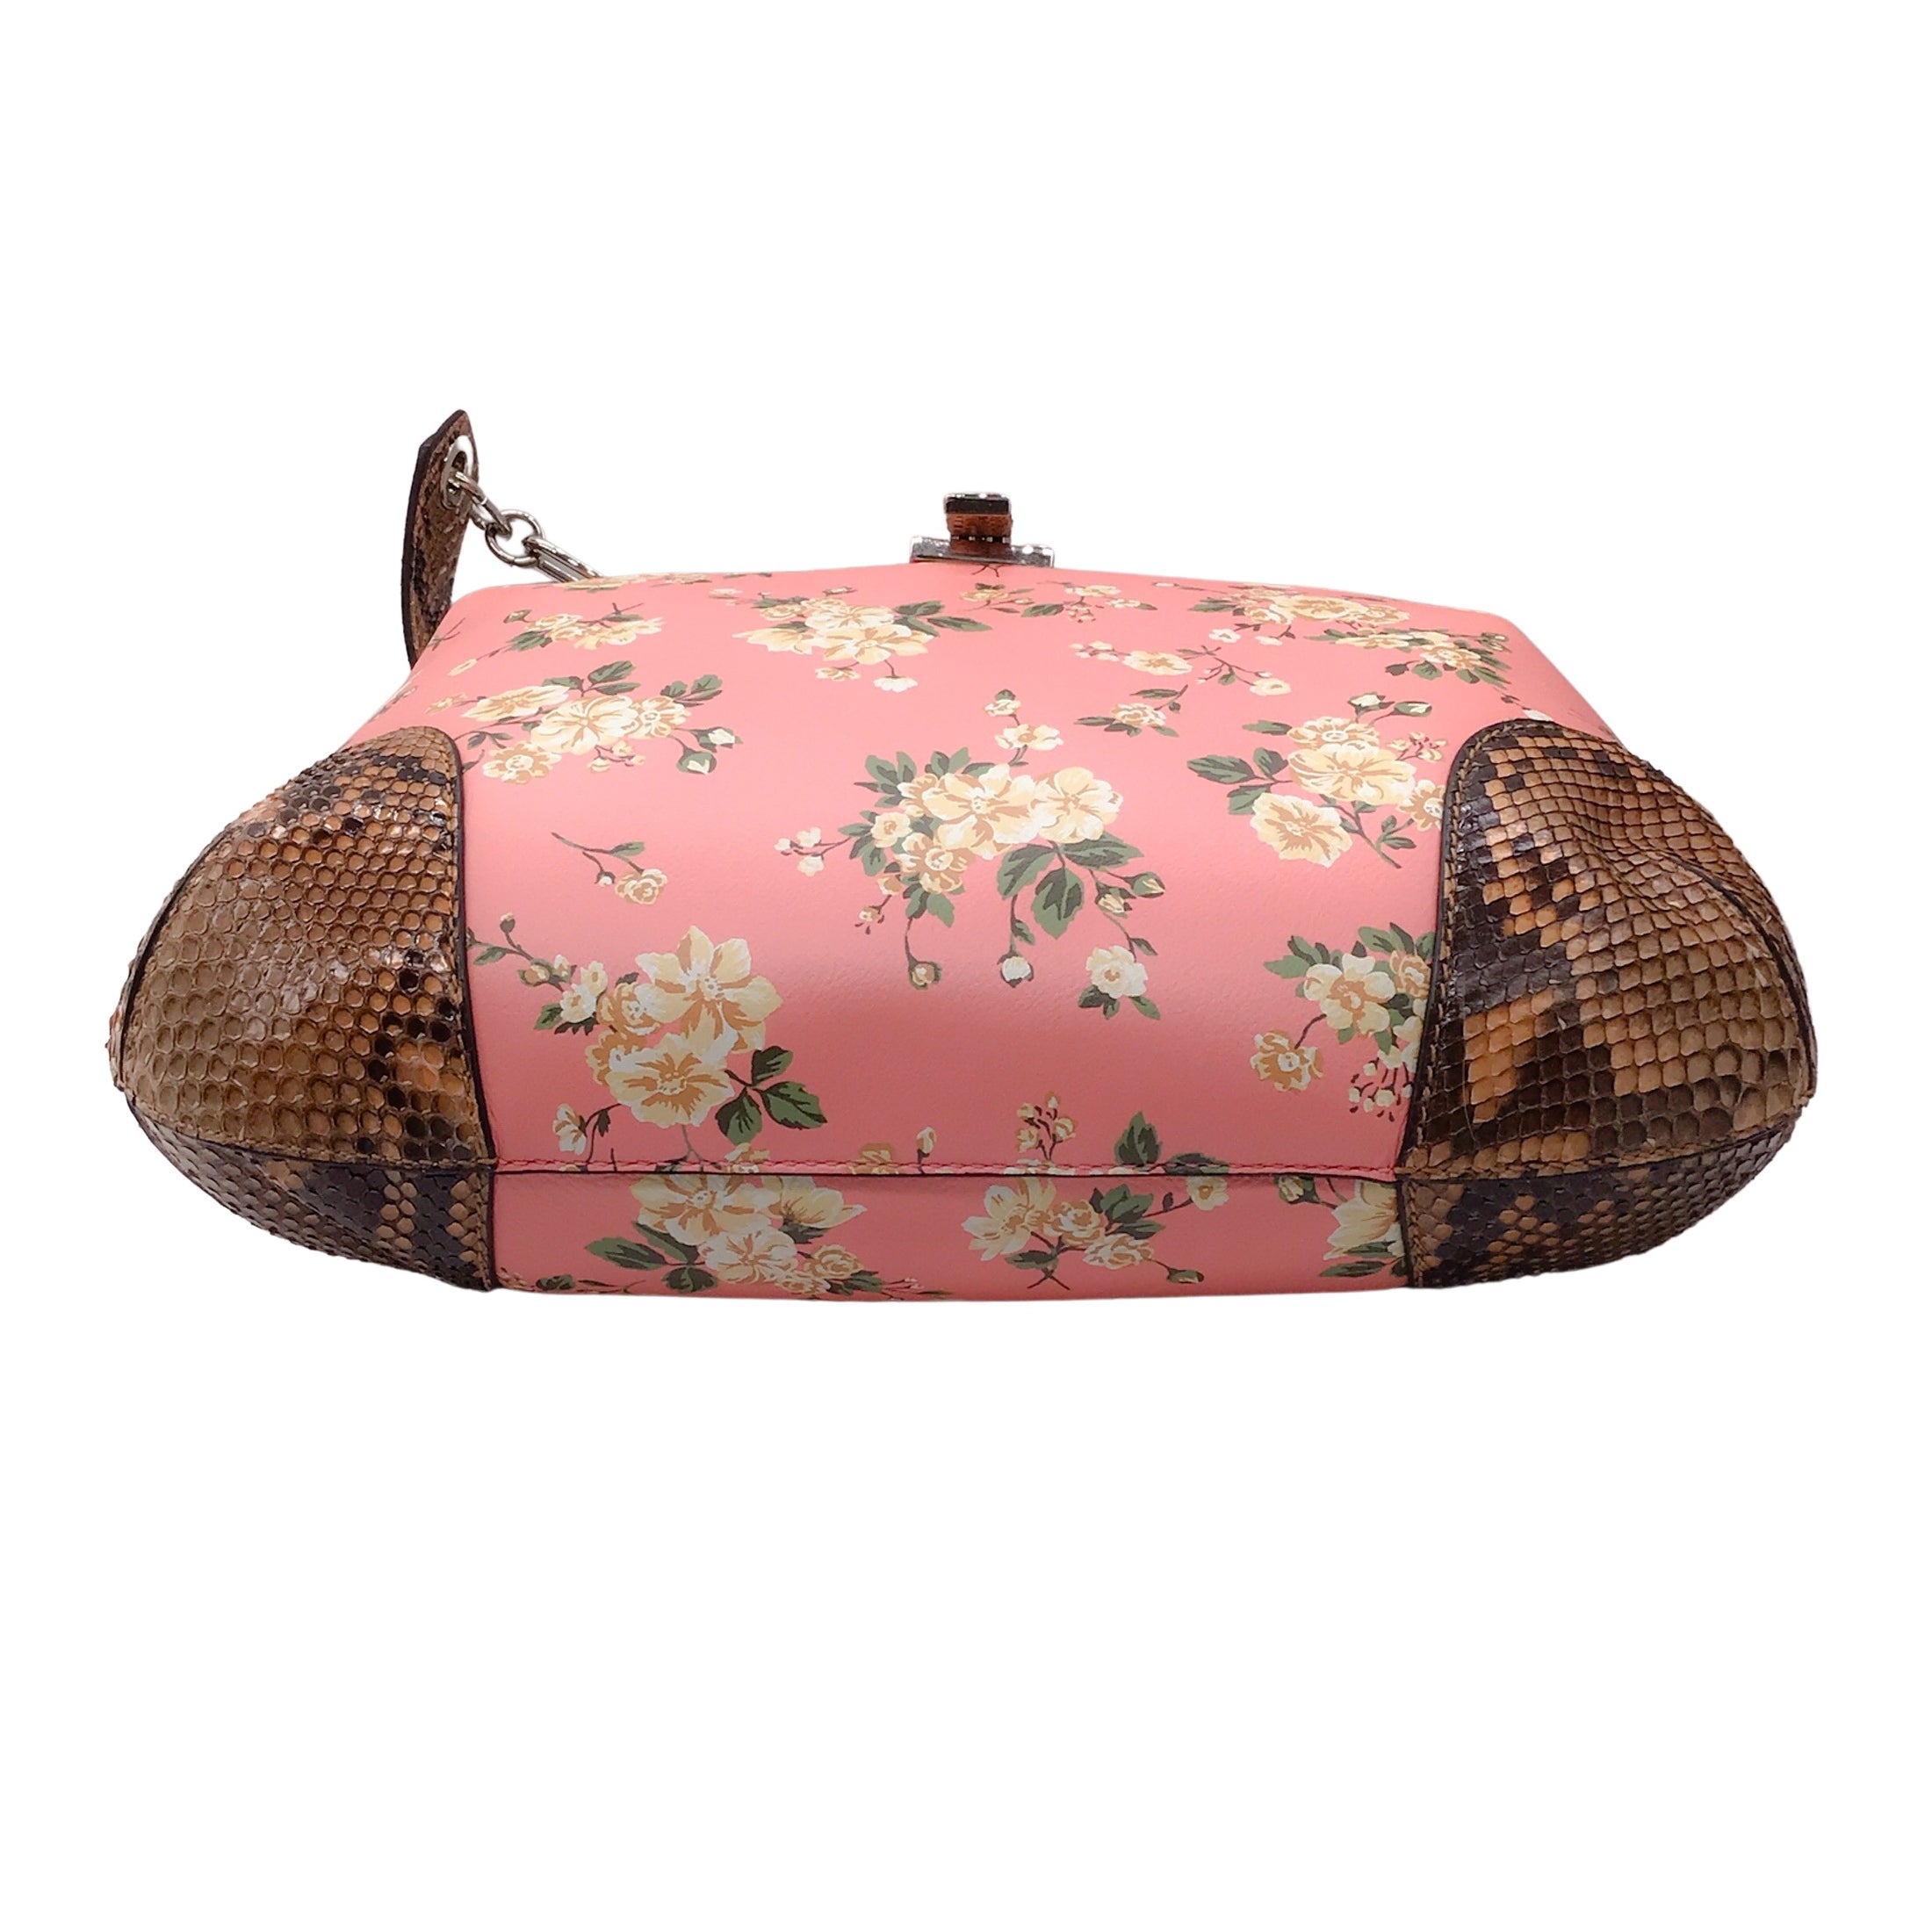 Michael Kors Collection Pink Multi Petal Bancroft Floral Printed Leather and Python Skin Leather Shoulder Bag